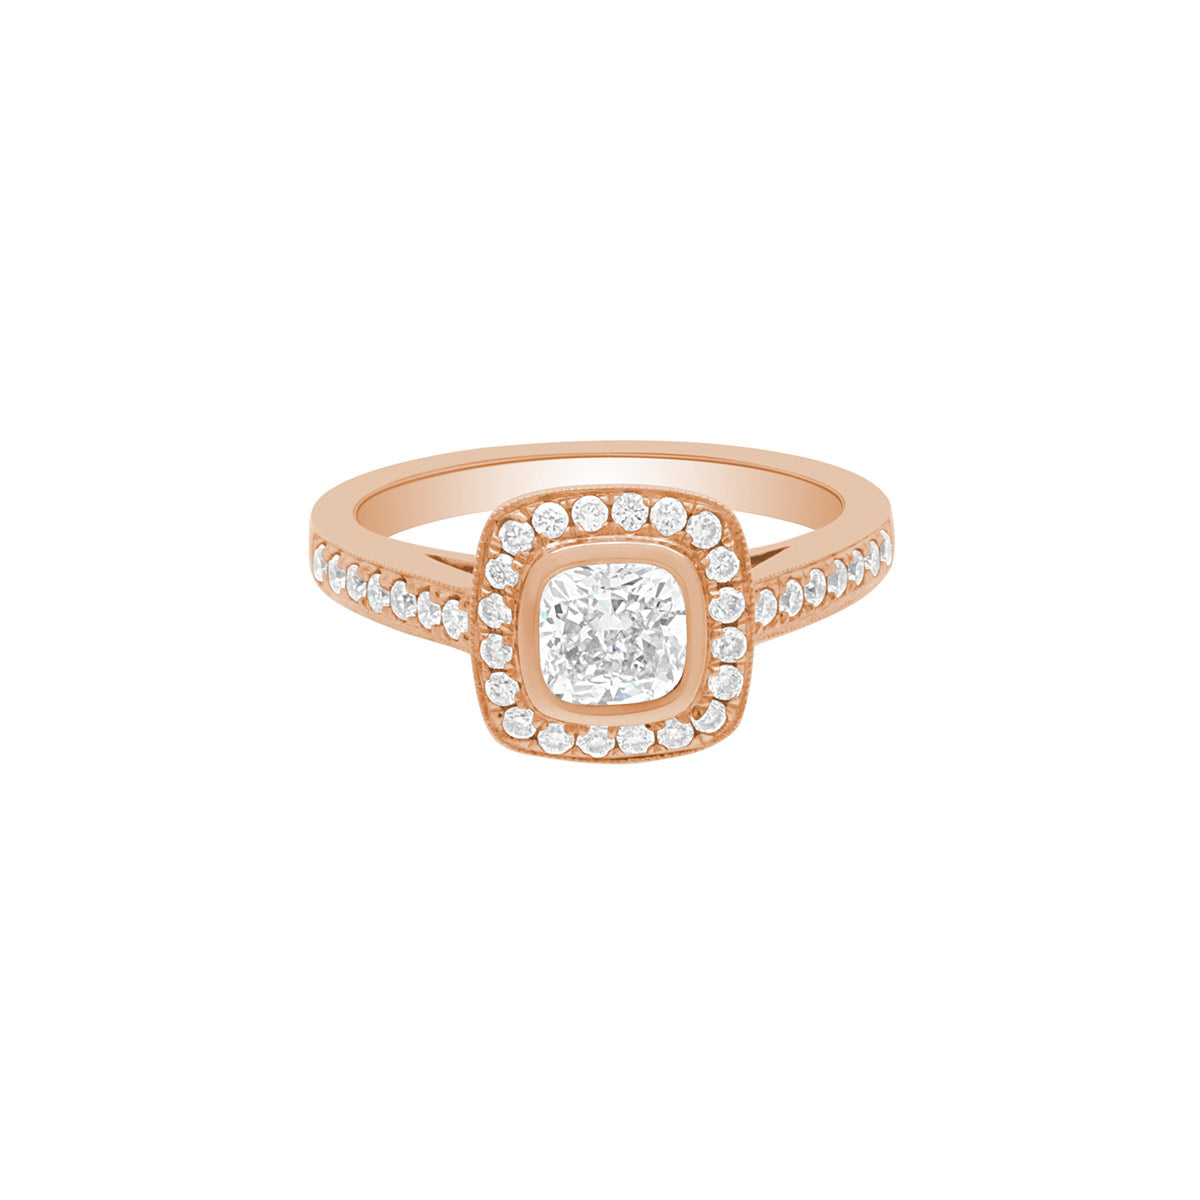 Bezel Set Cushion Cut Engagement Ring in rose gold